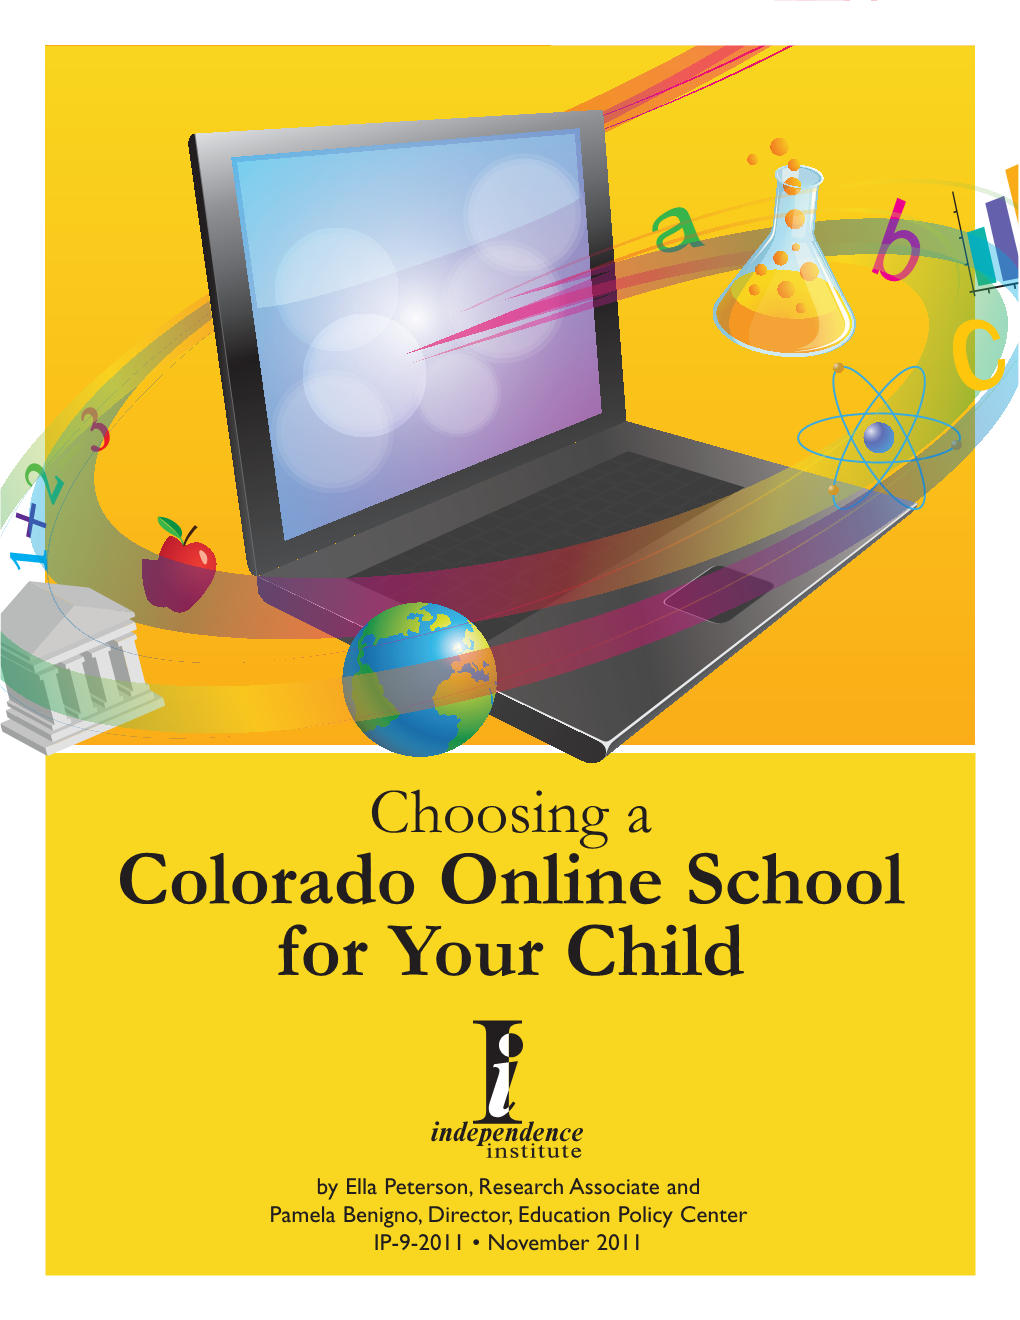 Colorado Online School for Your Child